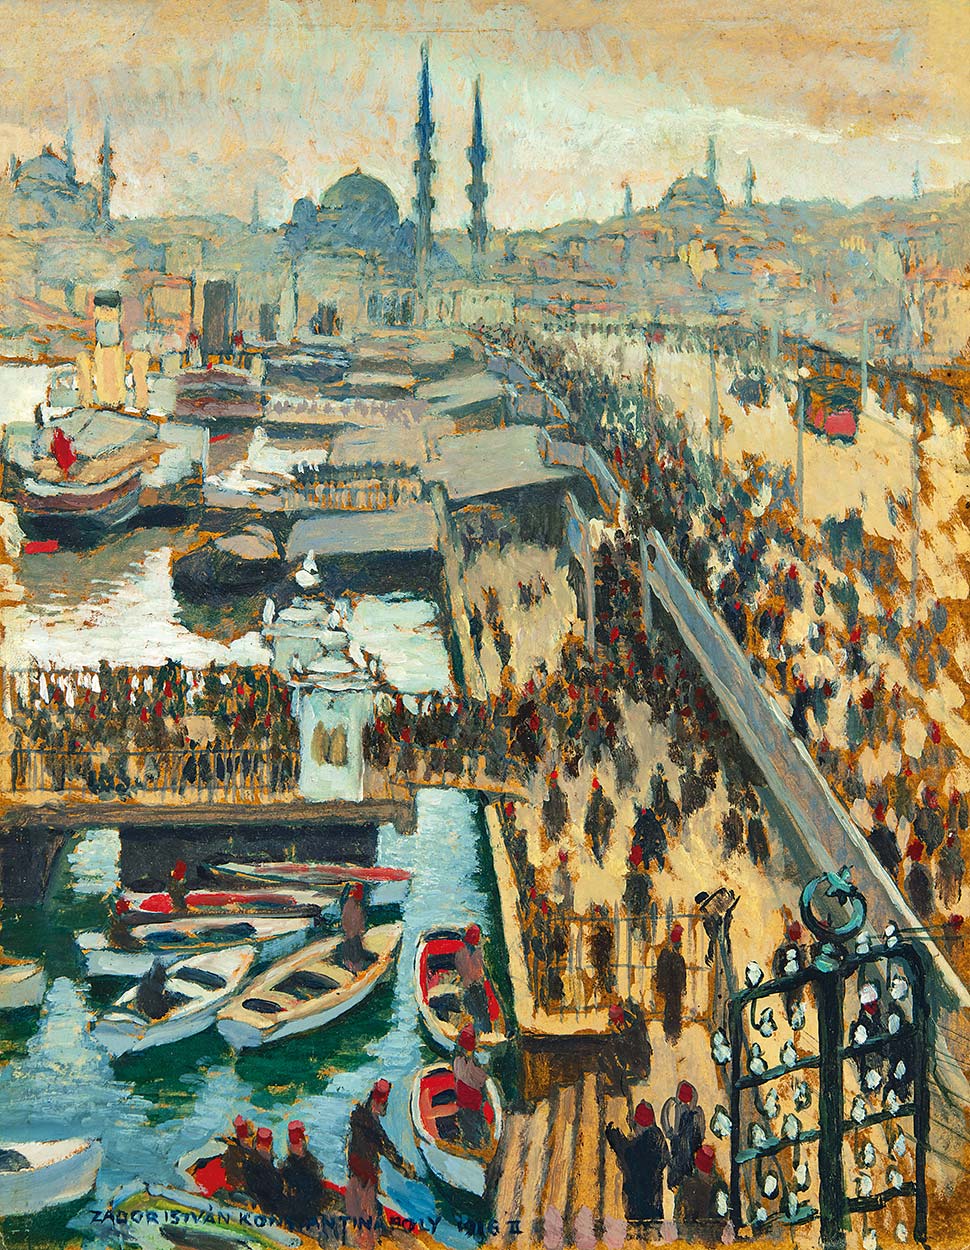 Zádor István (1882-1963) The Galata Bridge in Constantinople, 1916